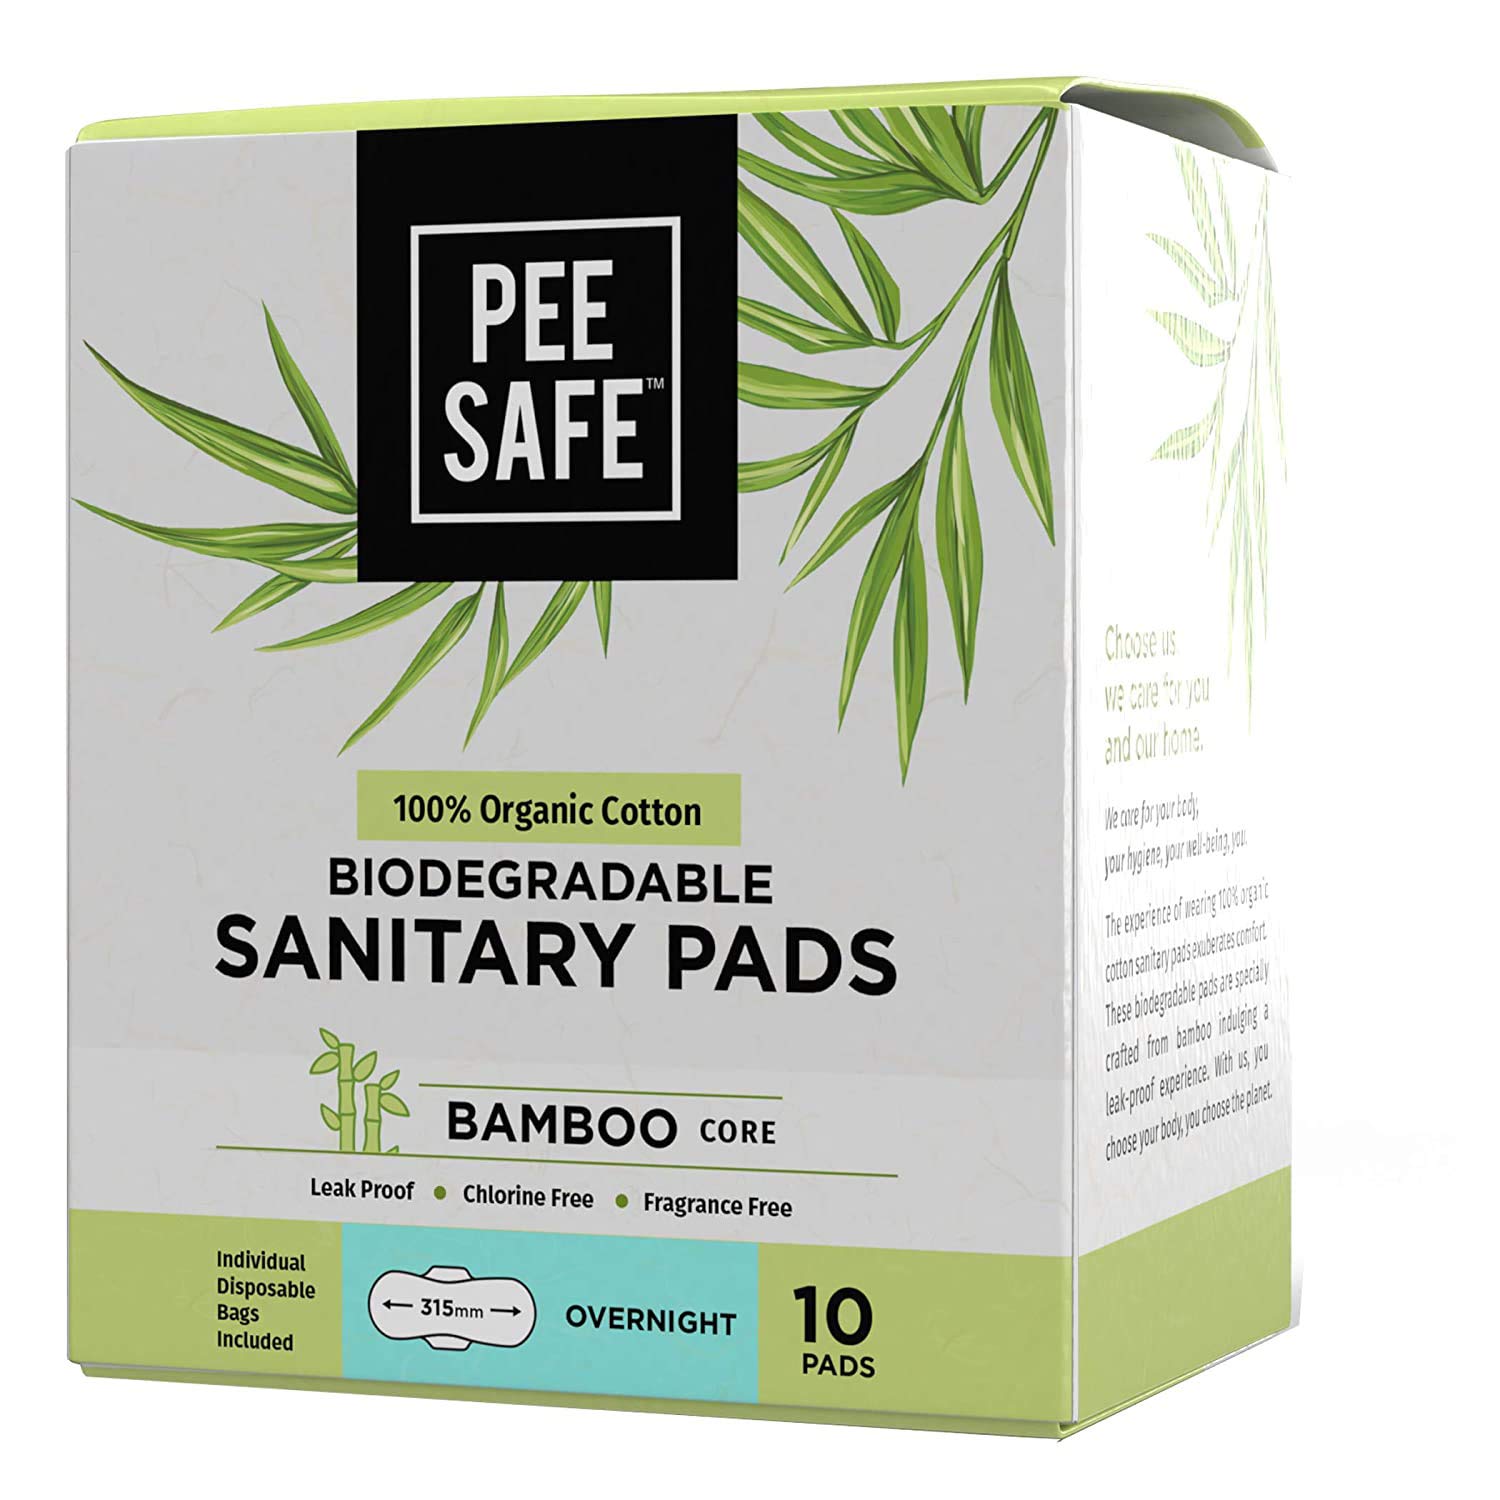 Shop Sanitary Pads At Pee Secure